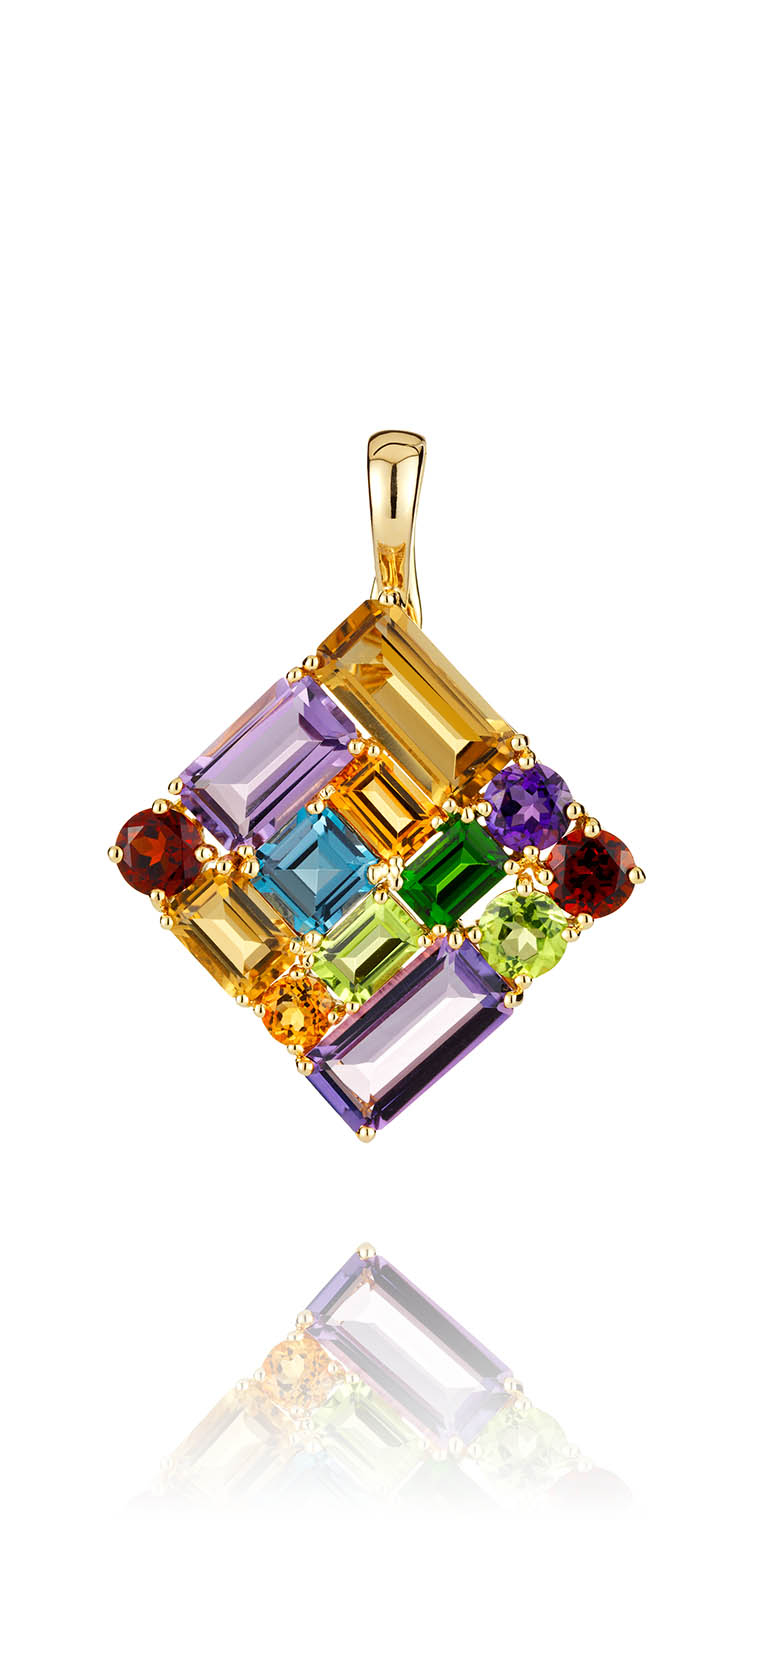 Packshot Factory - Pendant - Gold pendant with gemstones